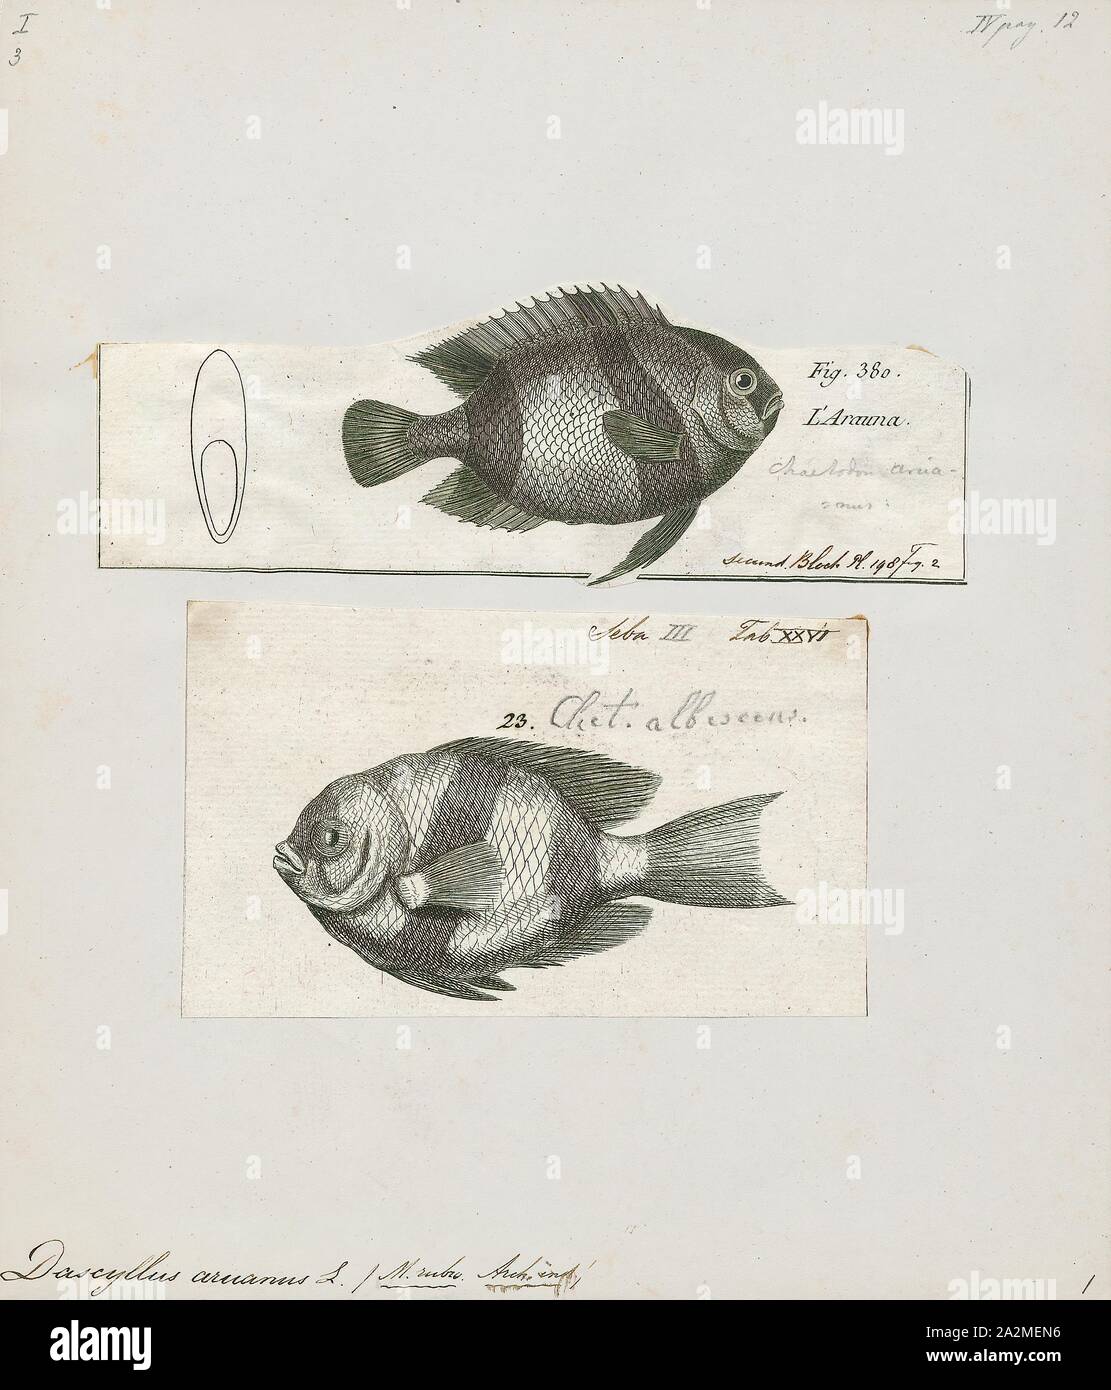 Dascyllus aruanus, Print, Dascyllus aruanus, known commonly as the whitetail dascyllus or humbug damselfish among other vernacular names, is a species of marine fish in the family Pomacentridae., 1700-1880 Stock Photo